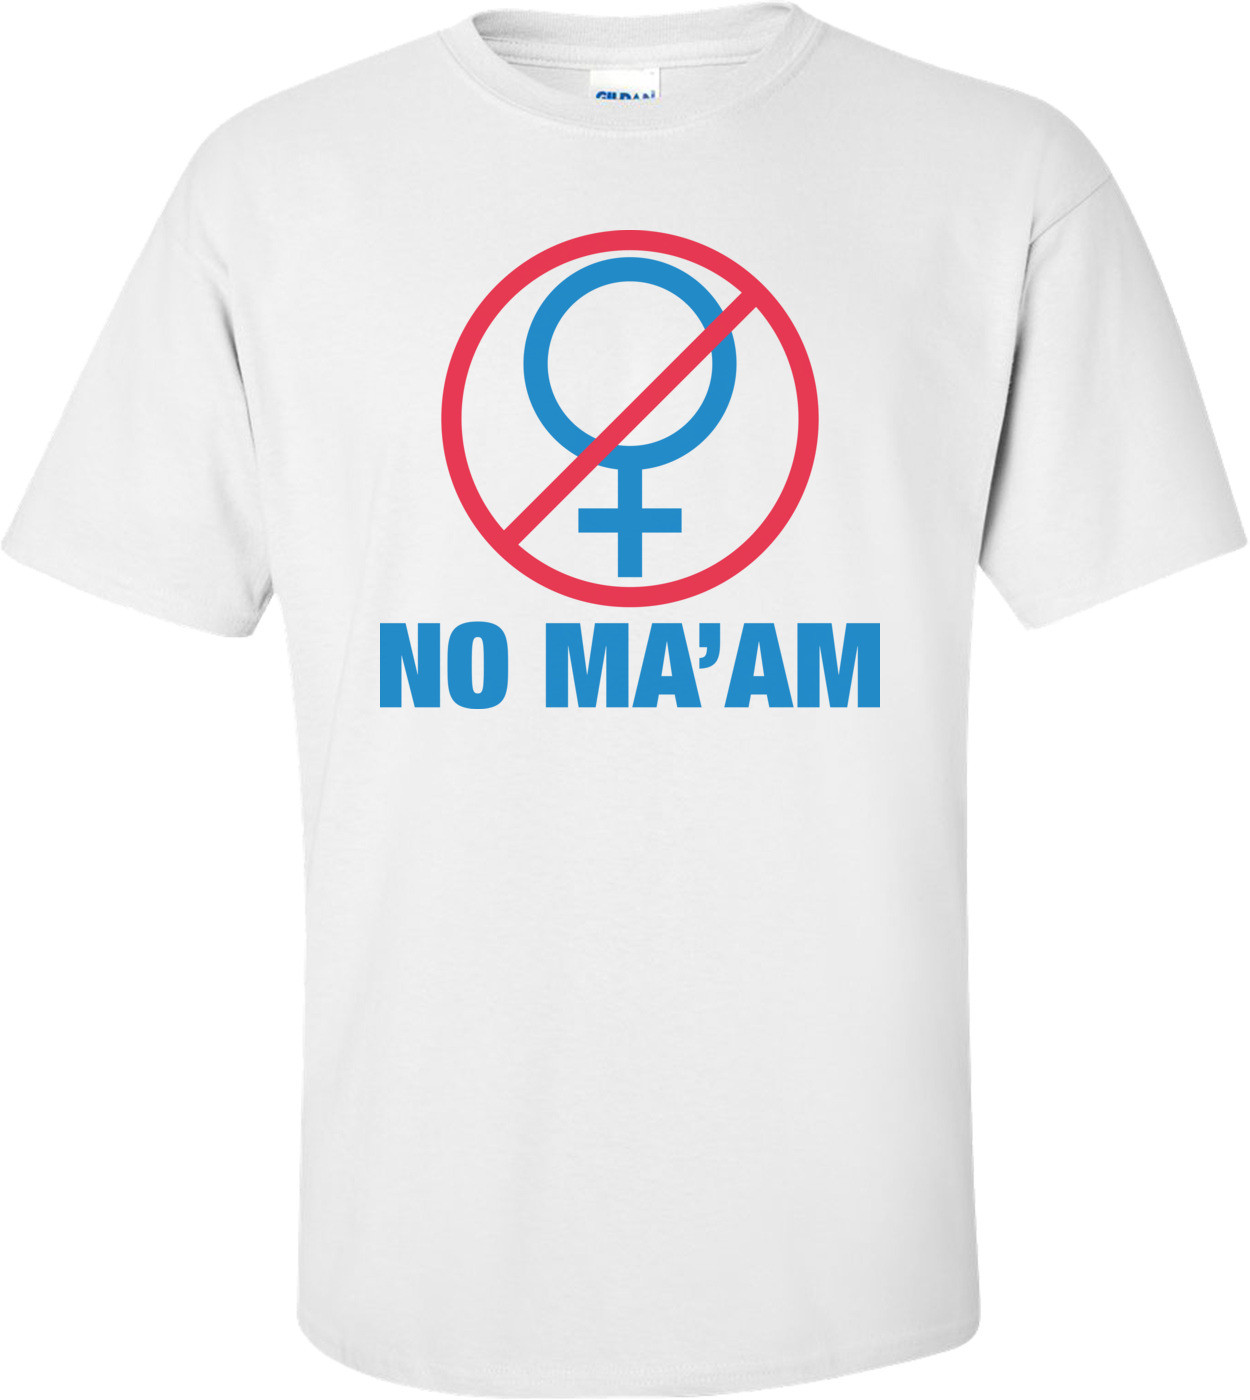 No Ma'am Al Bundy - Married With Children T-Shirt